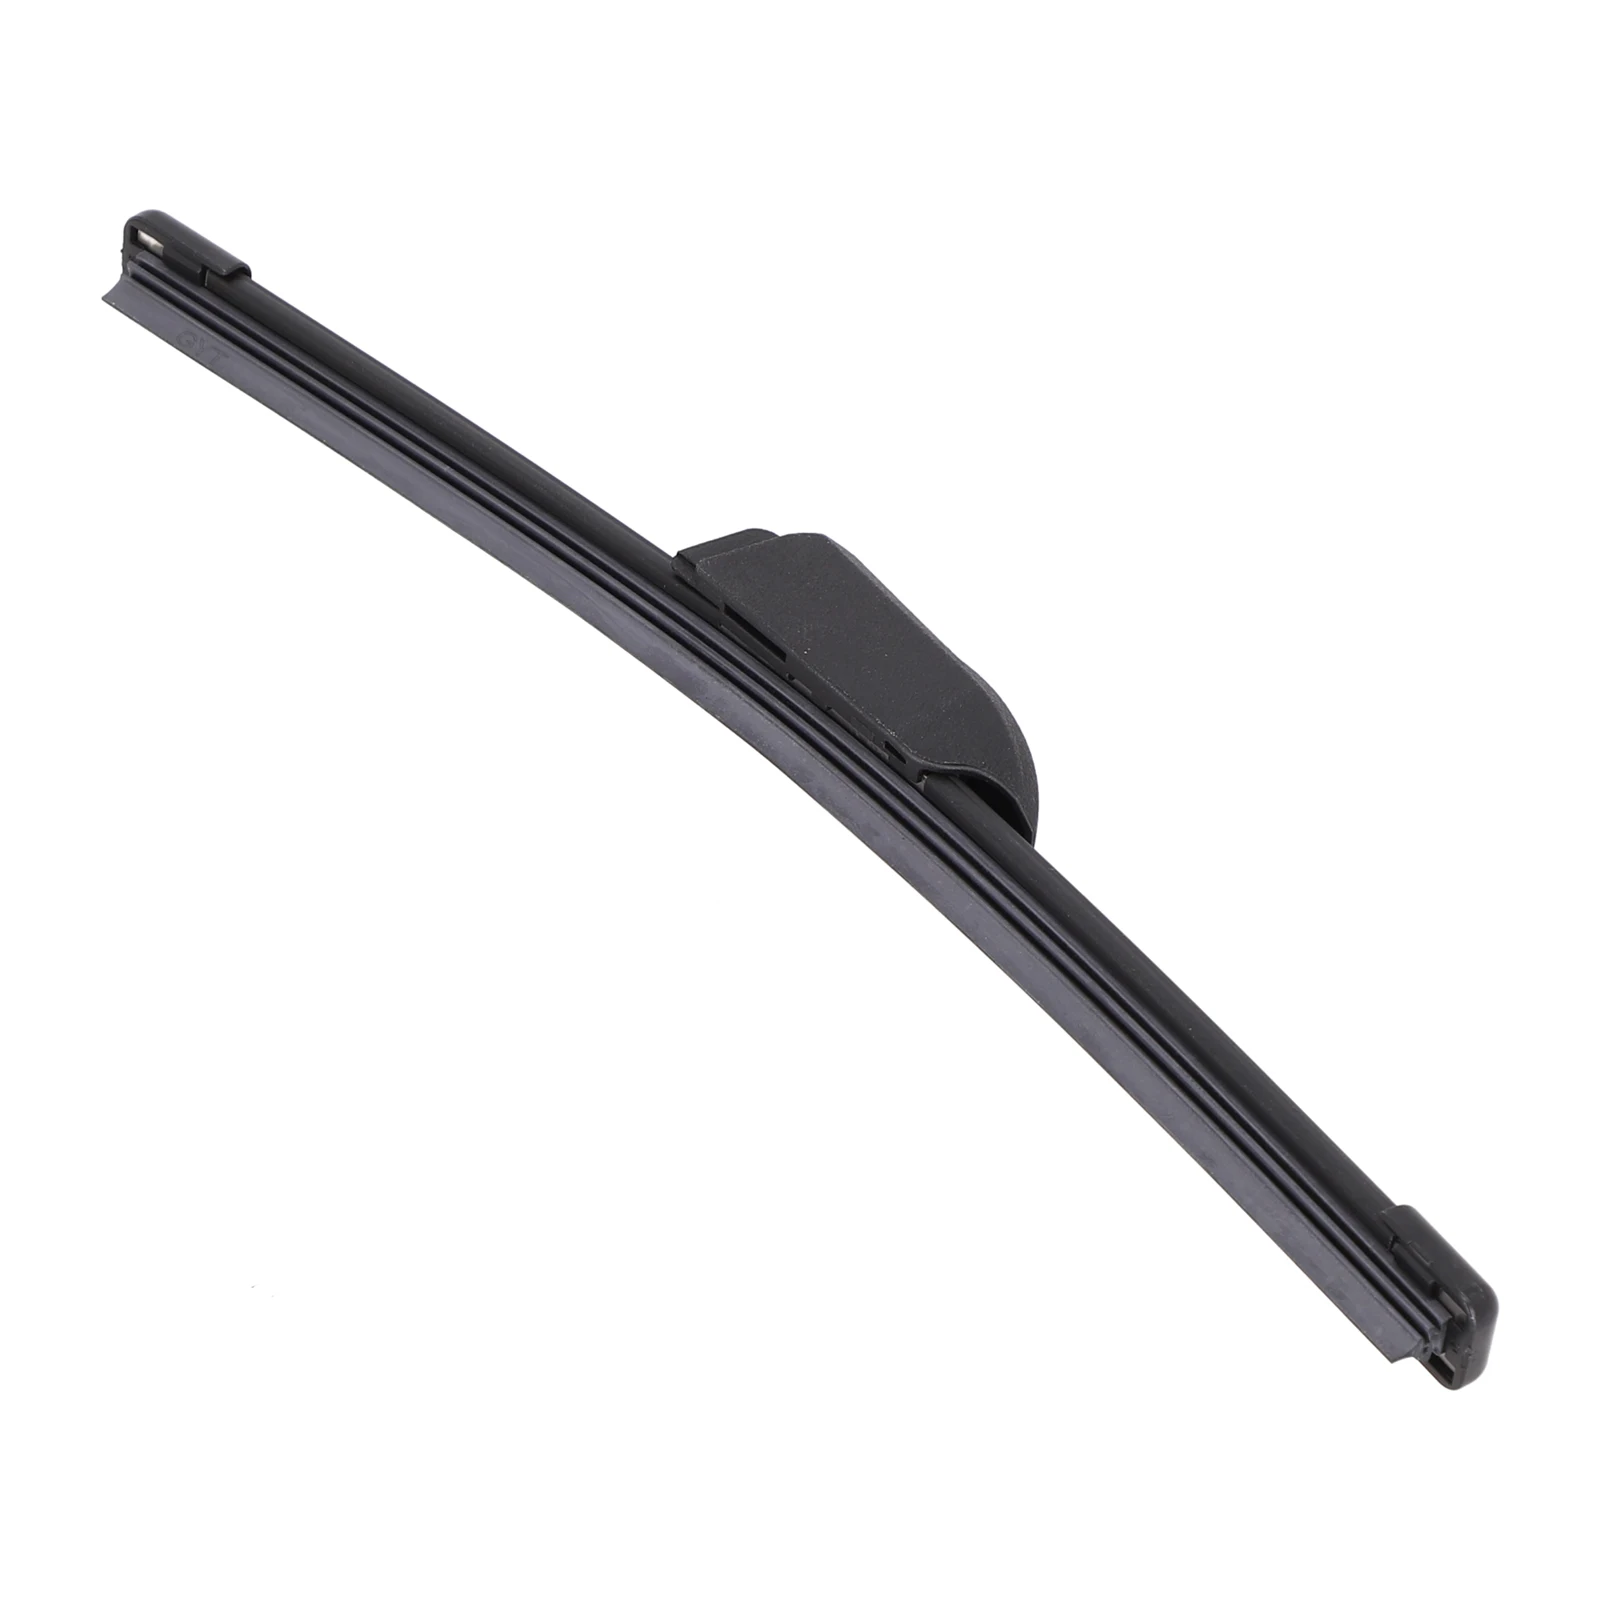 1PCS Car Rear Wiper Blade For Kia Soul 2019-2023 OEM Number 98850-K0000 Black Vehicle Rear Wiper Blade Black Accessories